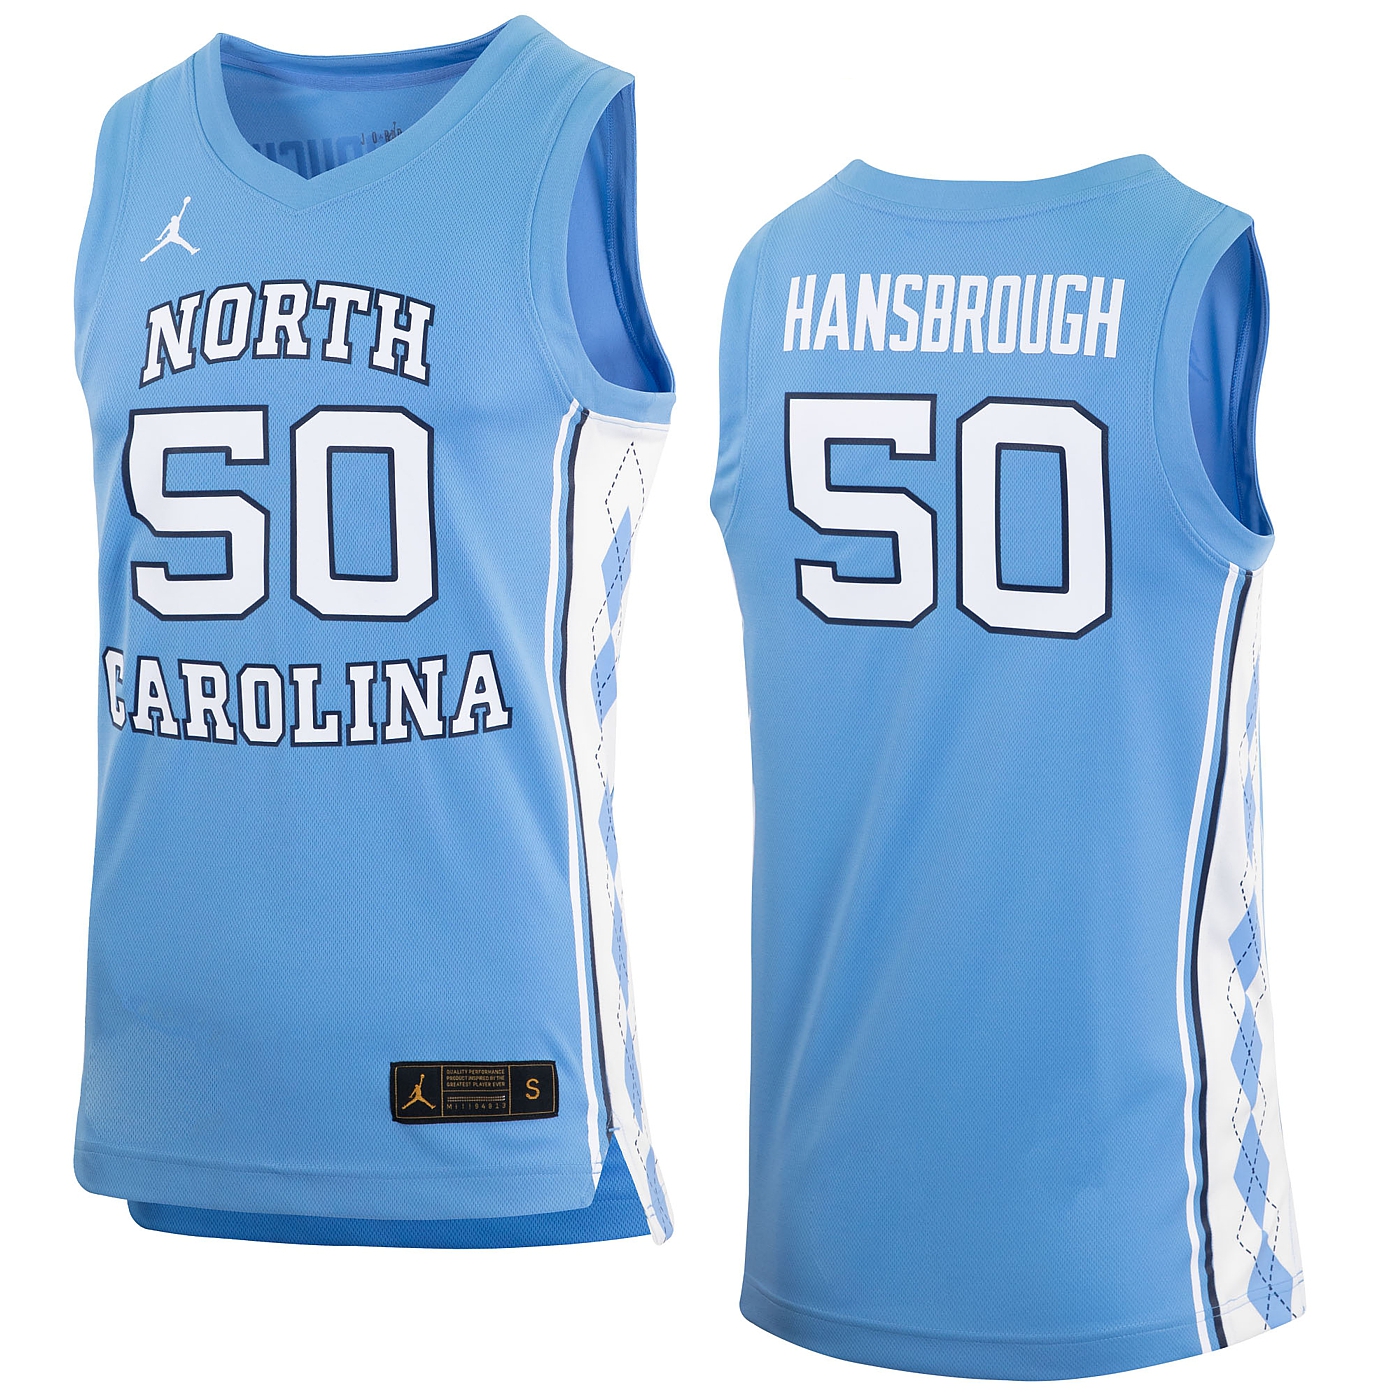 North Carolina UNC Tar Heel Tyler Hansbrough Nike Jordan Stitched JERSEY XL